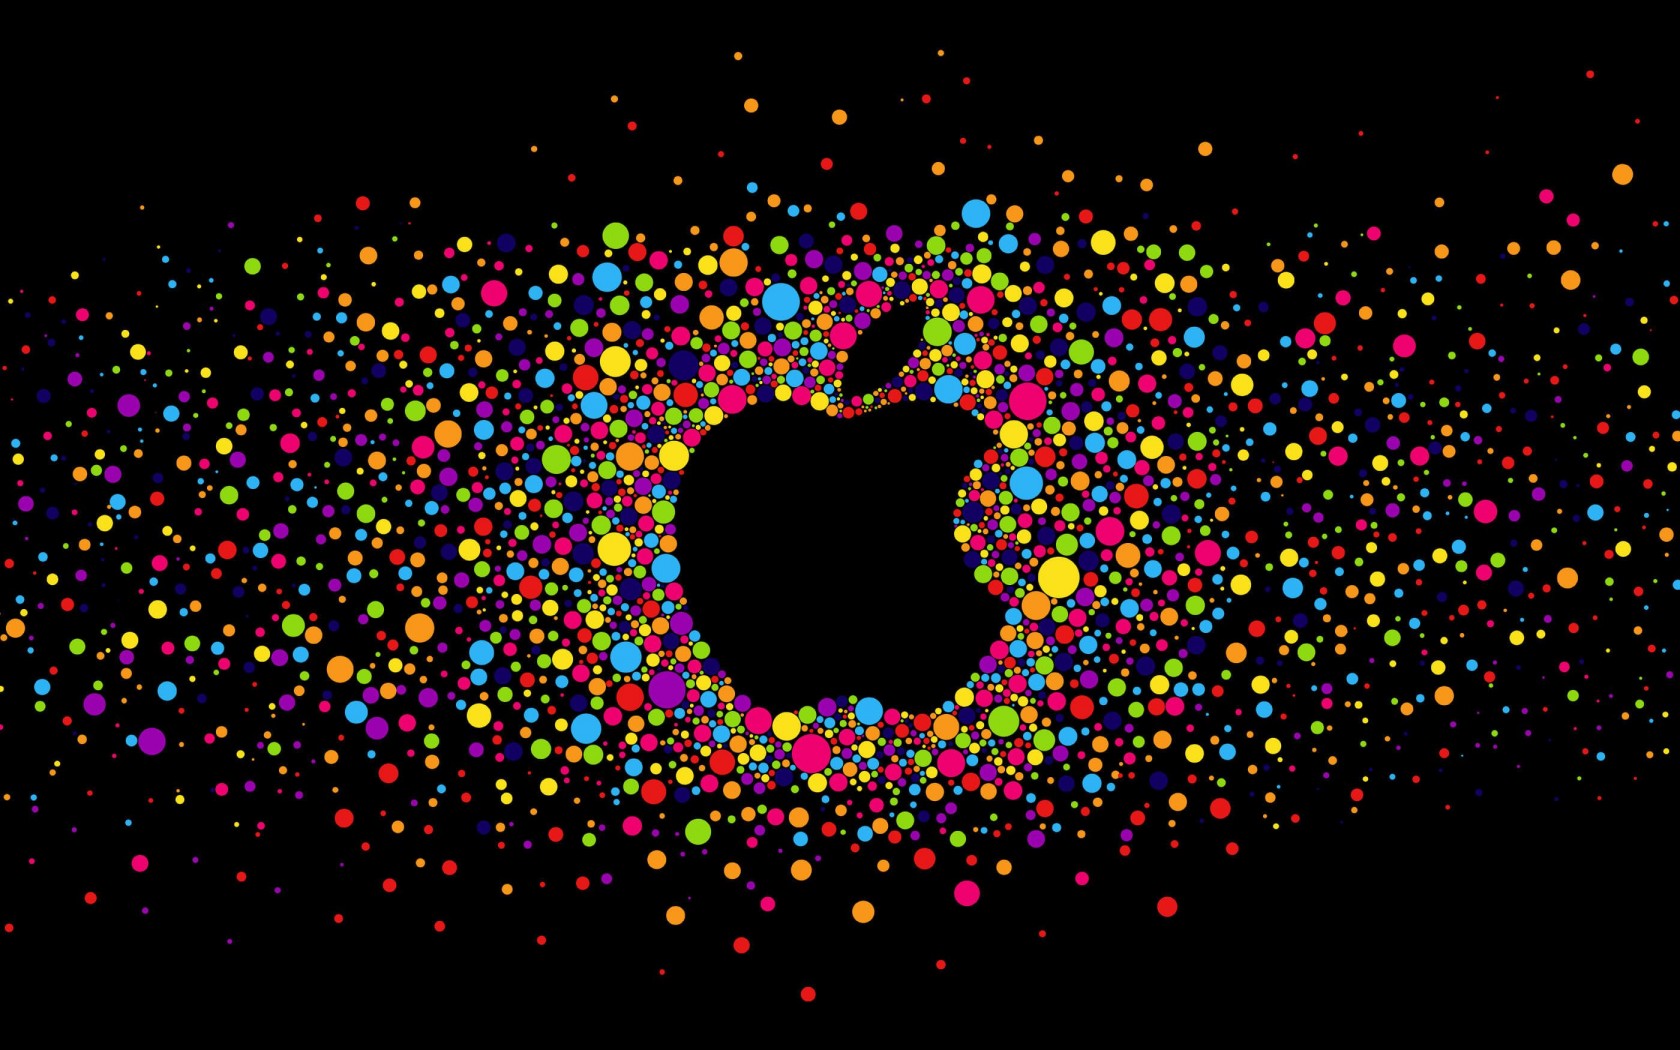 Black Apple Logo Particles Wallpaper for Desktop 1680x1050